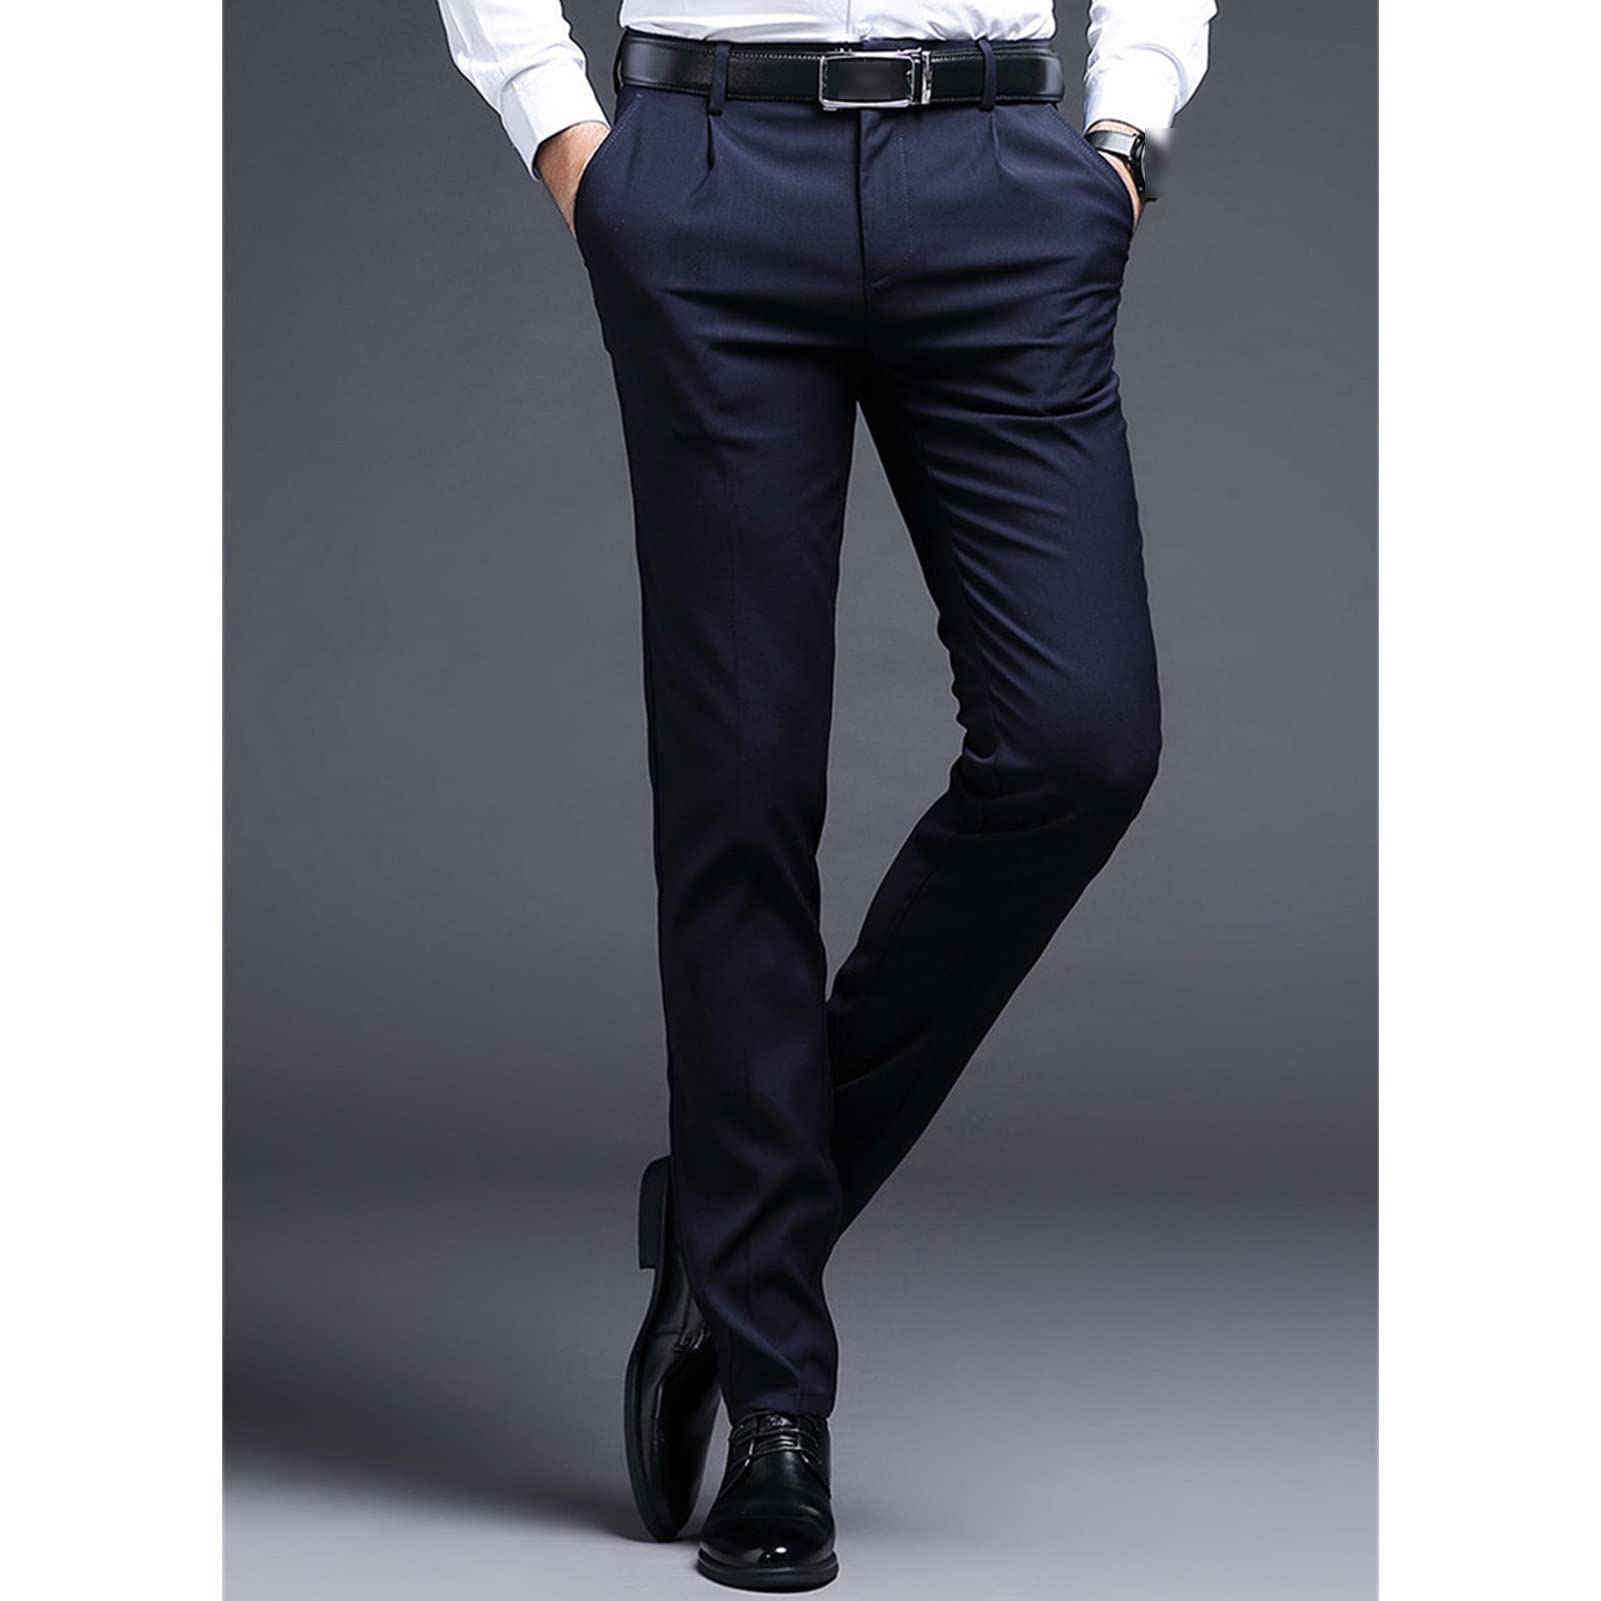 Men's Stylish Slim Fit Pant Classic Straight Leg Casual Suit Pant Lightweight Business Wrinkle Resistant Trouser (Blue,35)